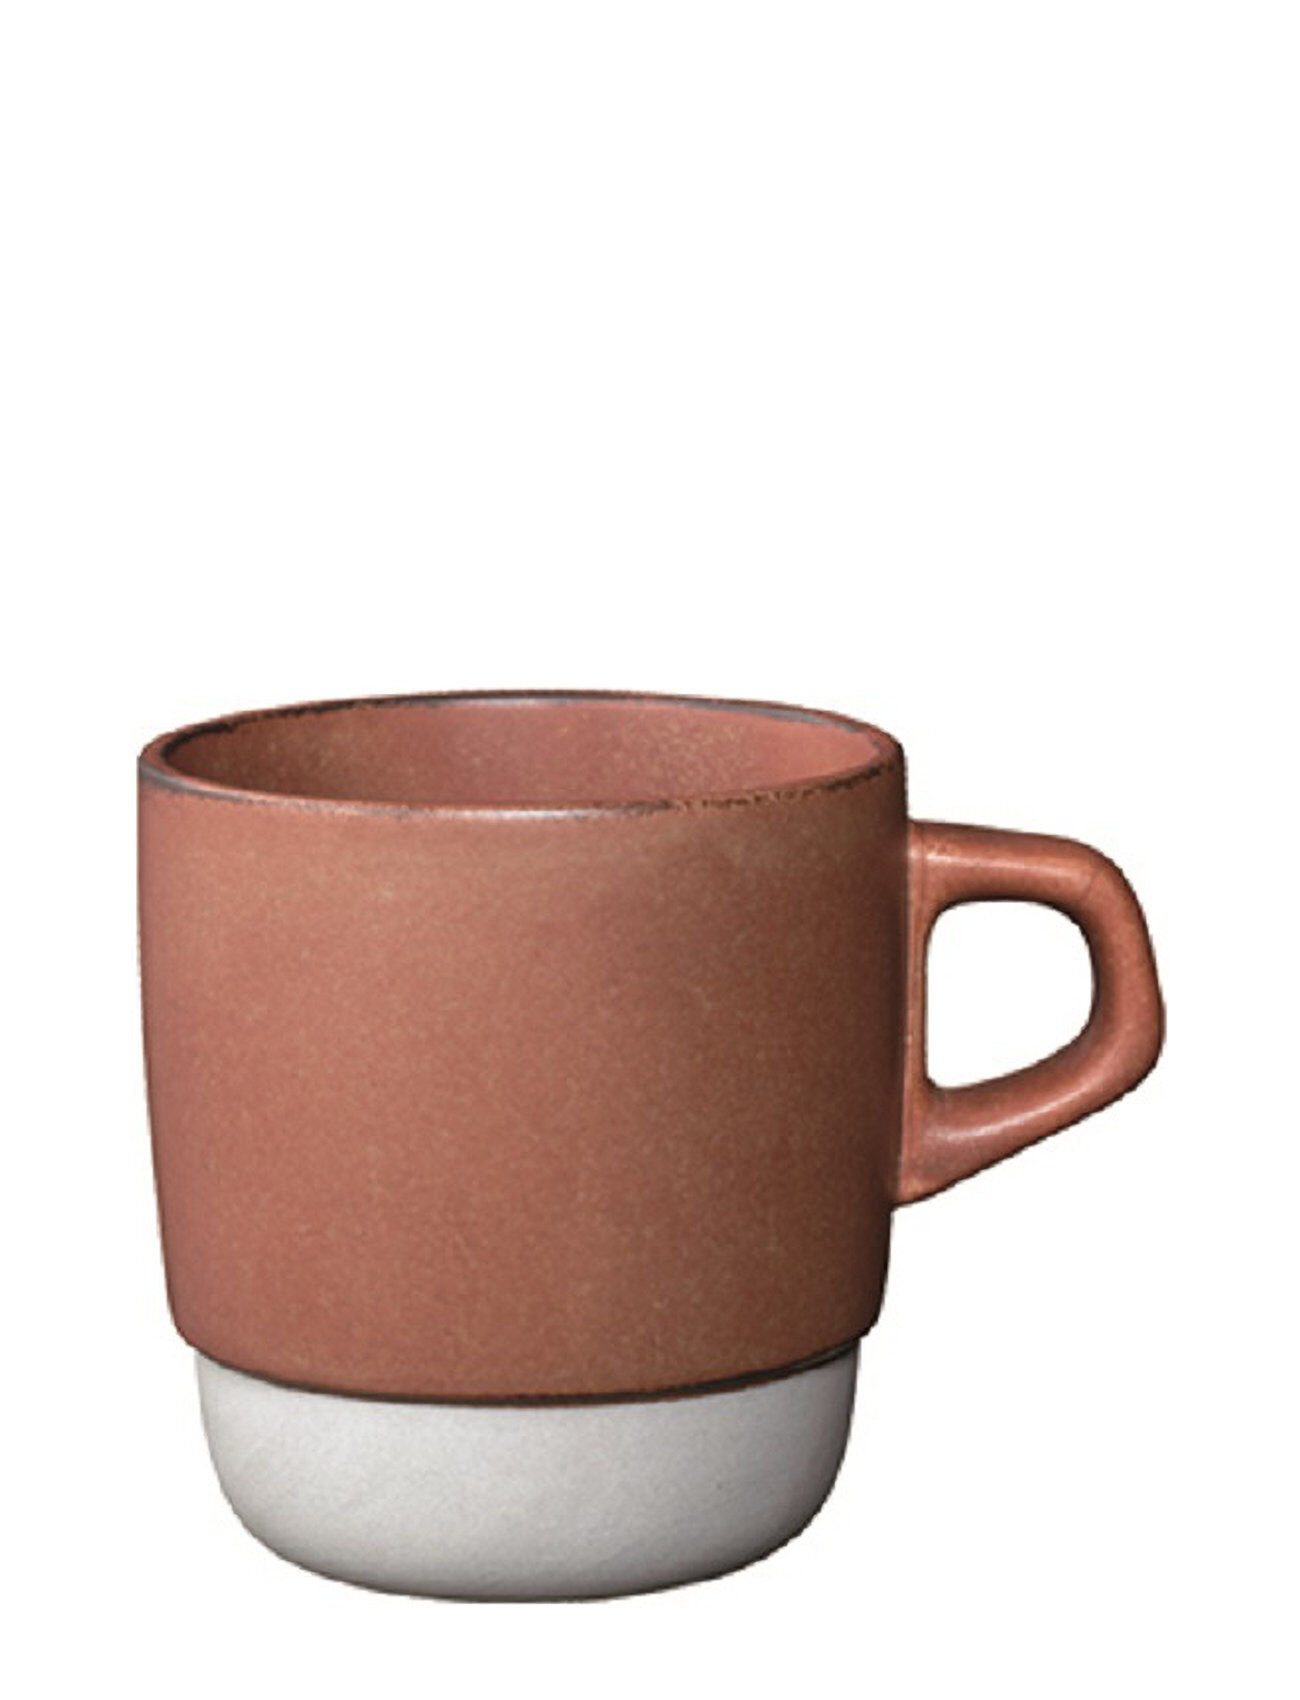 Kinto Stacking Mug Home Tableware Cups & Mugs Coffee Cups Oransje Kinto